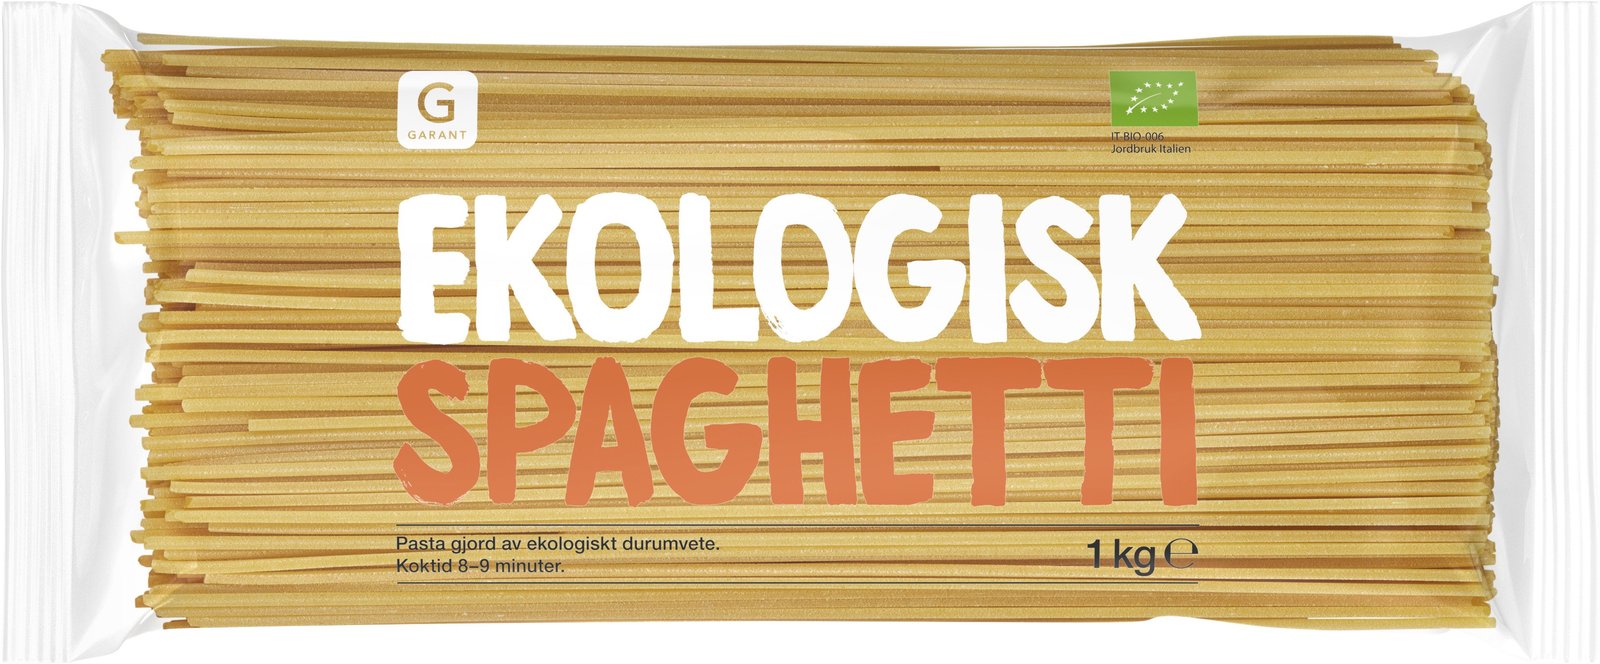 Garant Ekologisk Spagetti 1kg